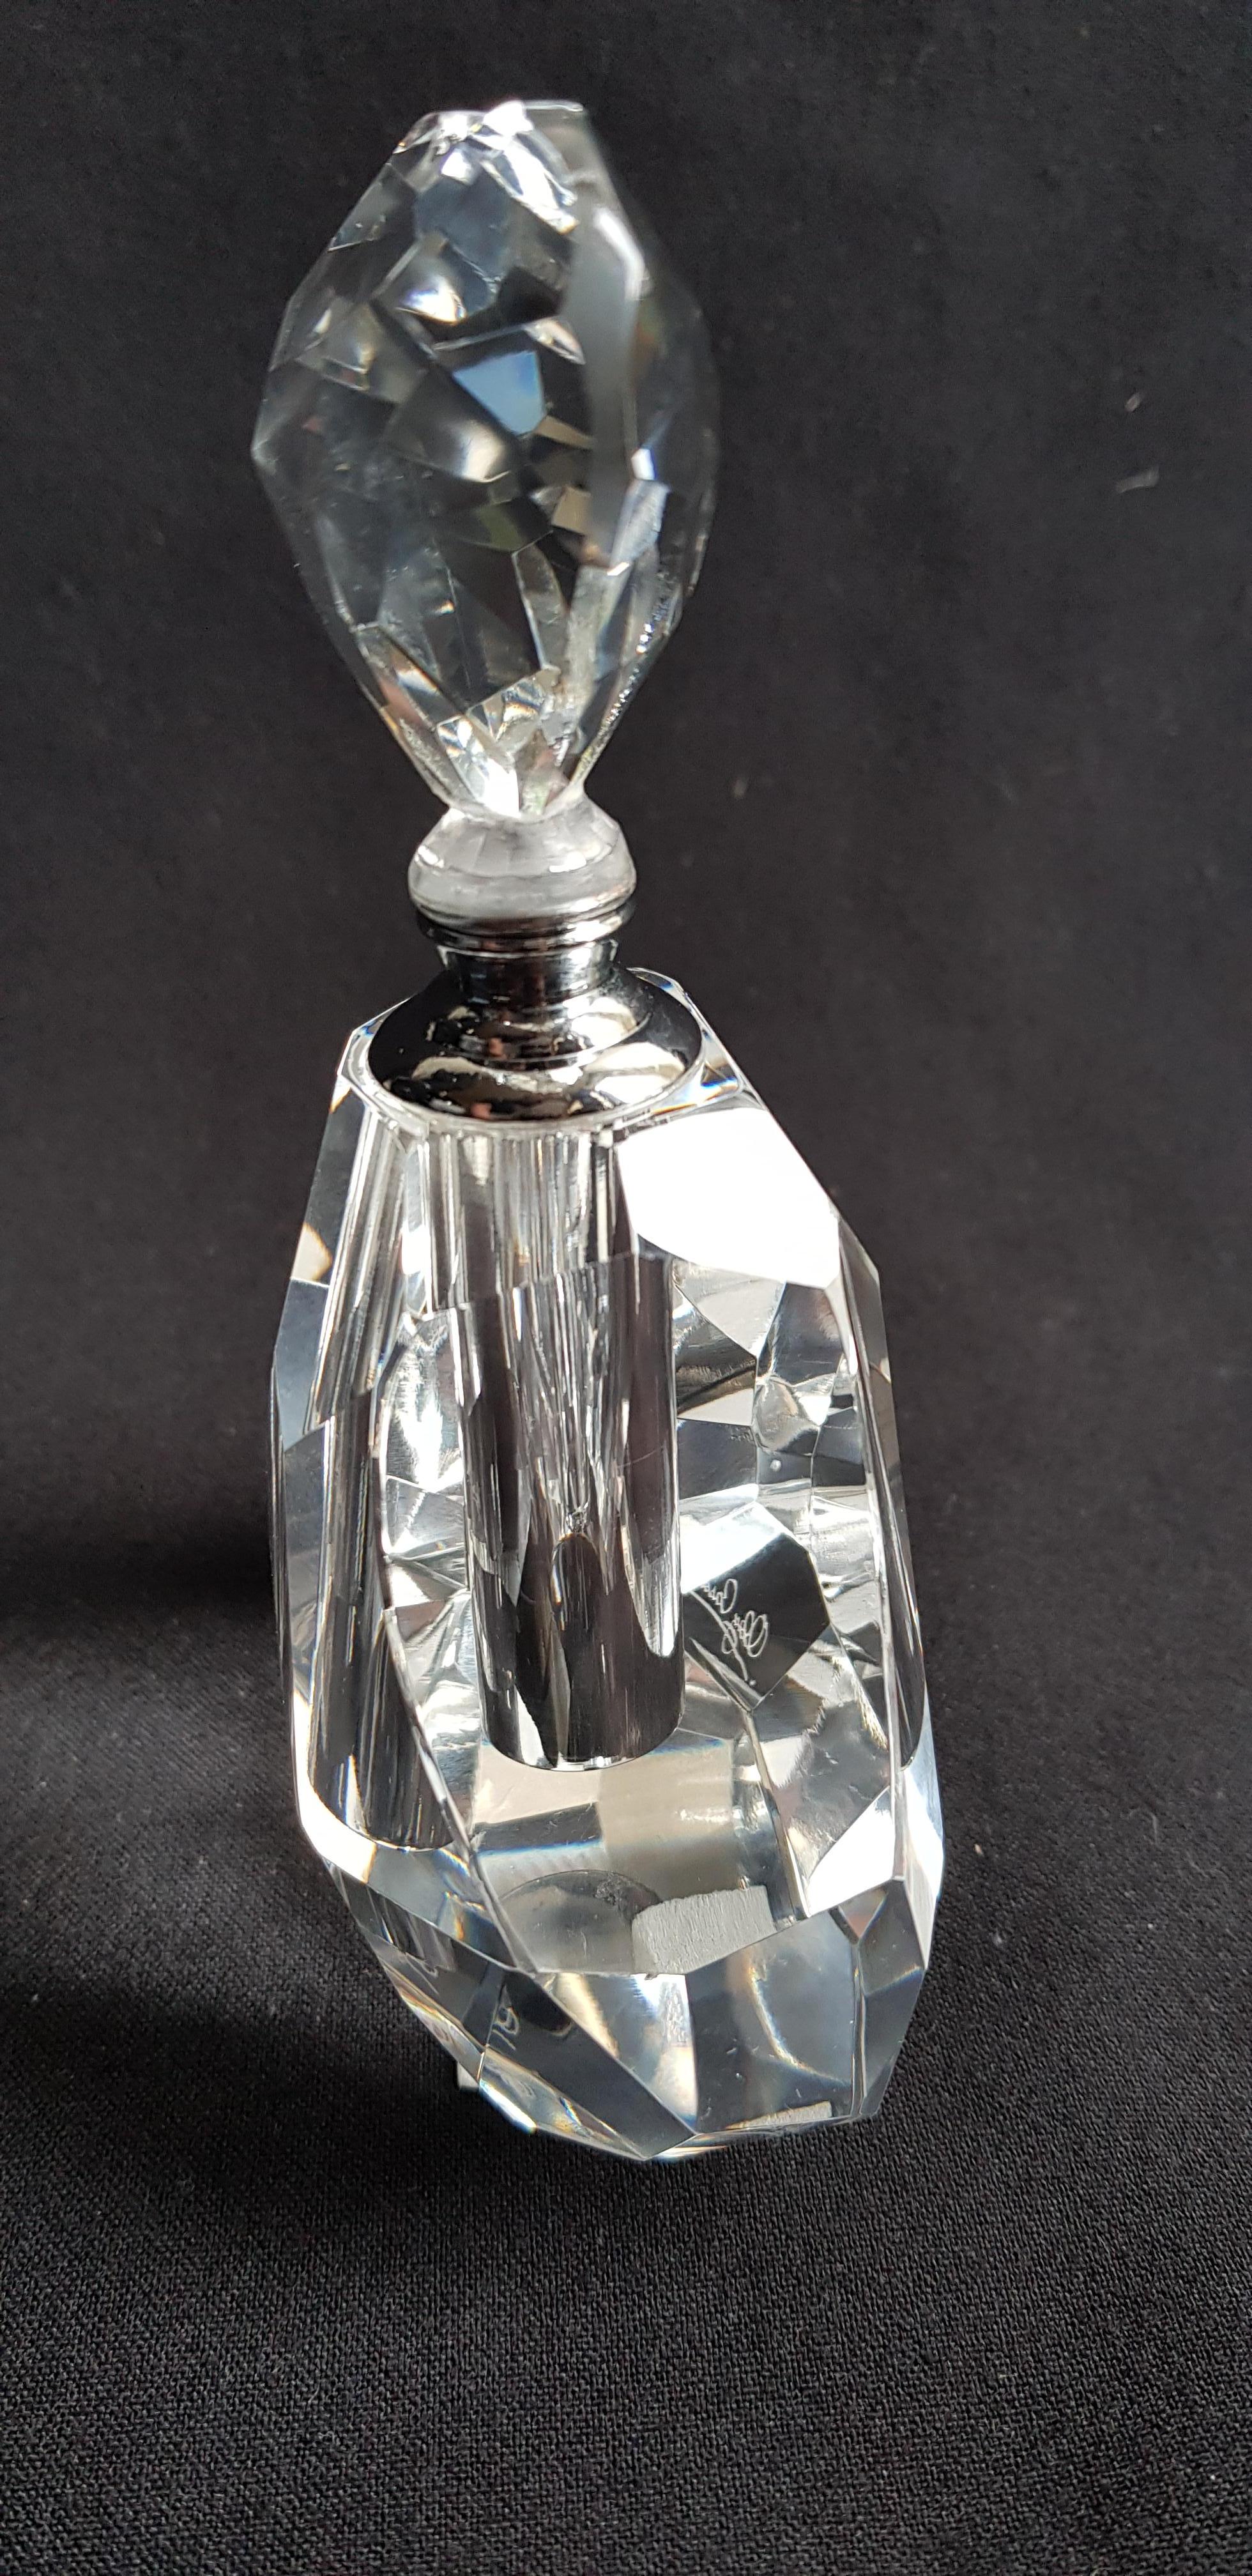 Hand-Carved Vitange Oleg Cassini Signed Crystal Perfume Bottle For Sale